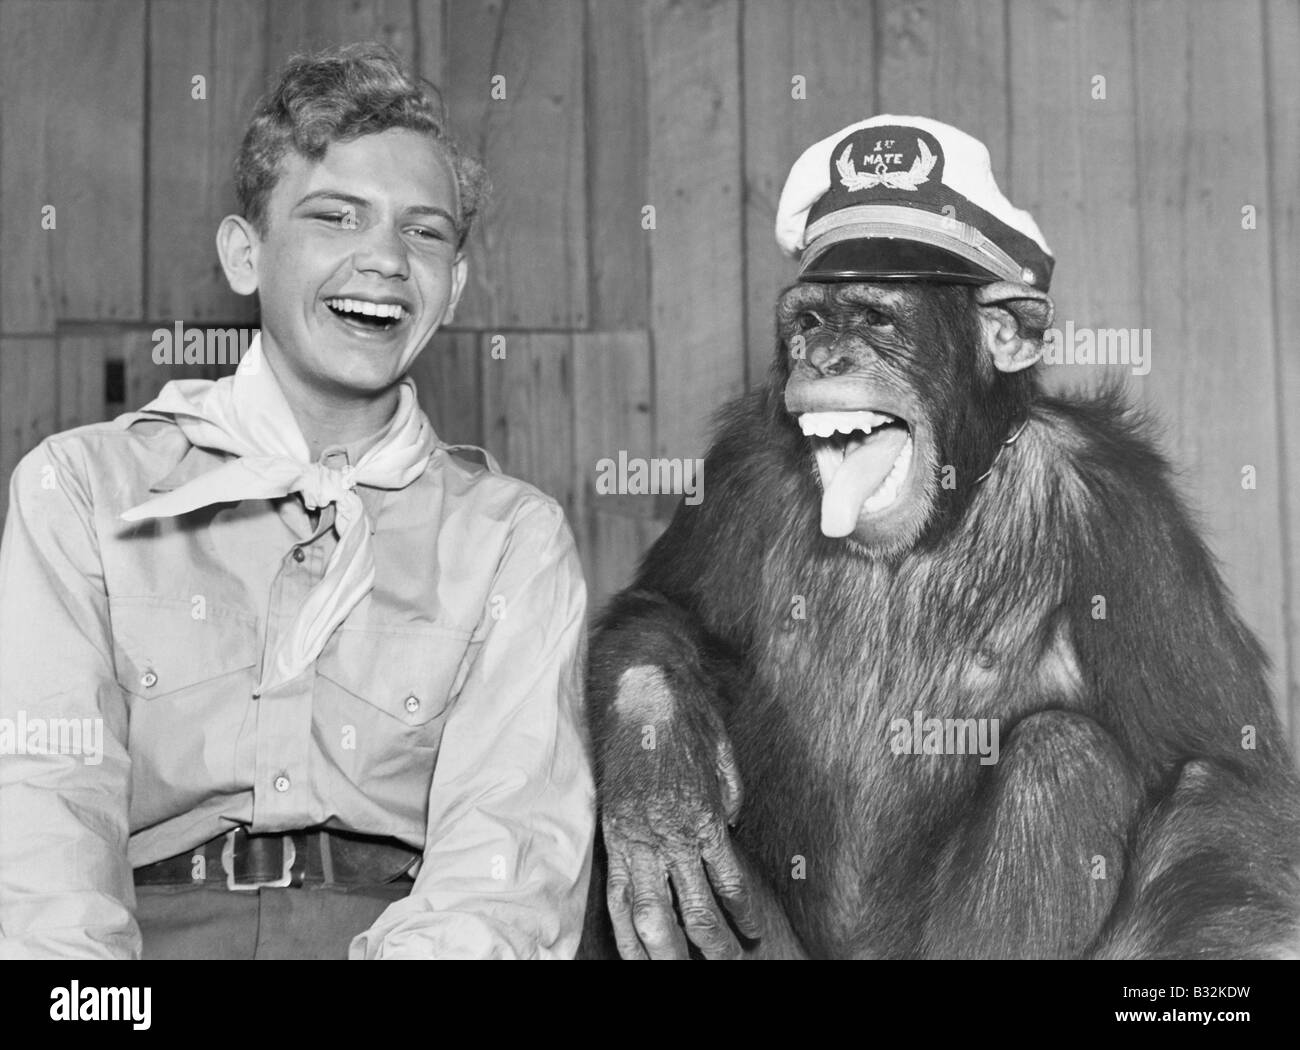 Laughing boy-scout et monkey wearing hat Banque D'Images